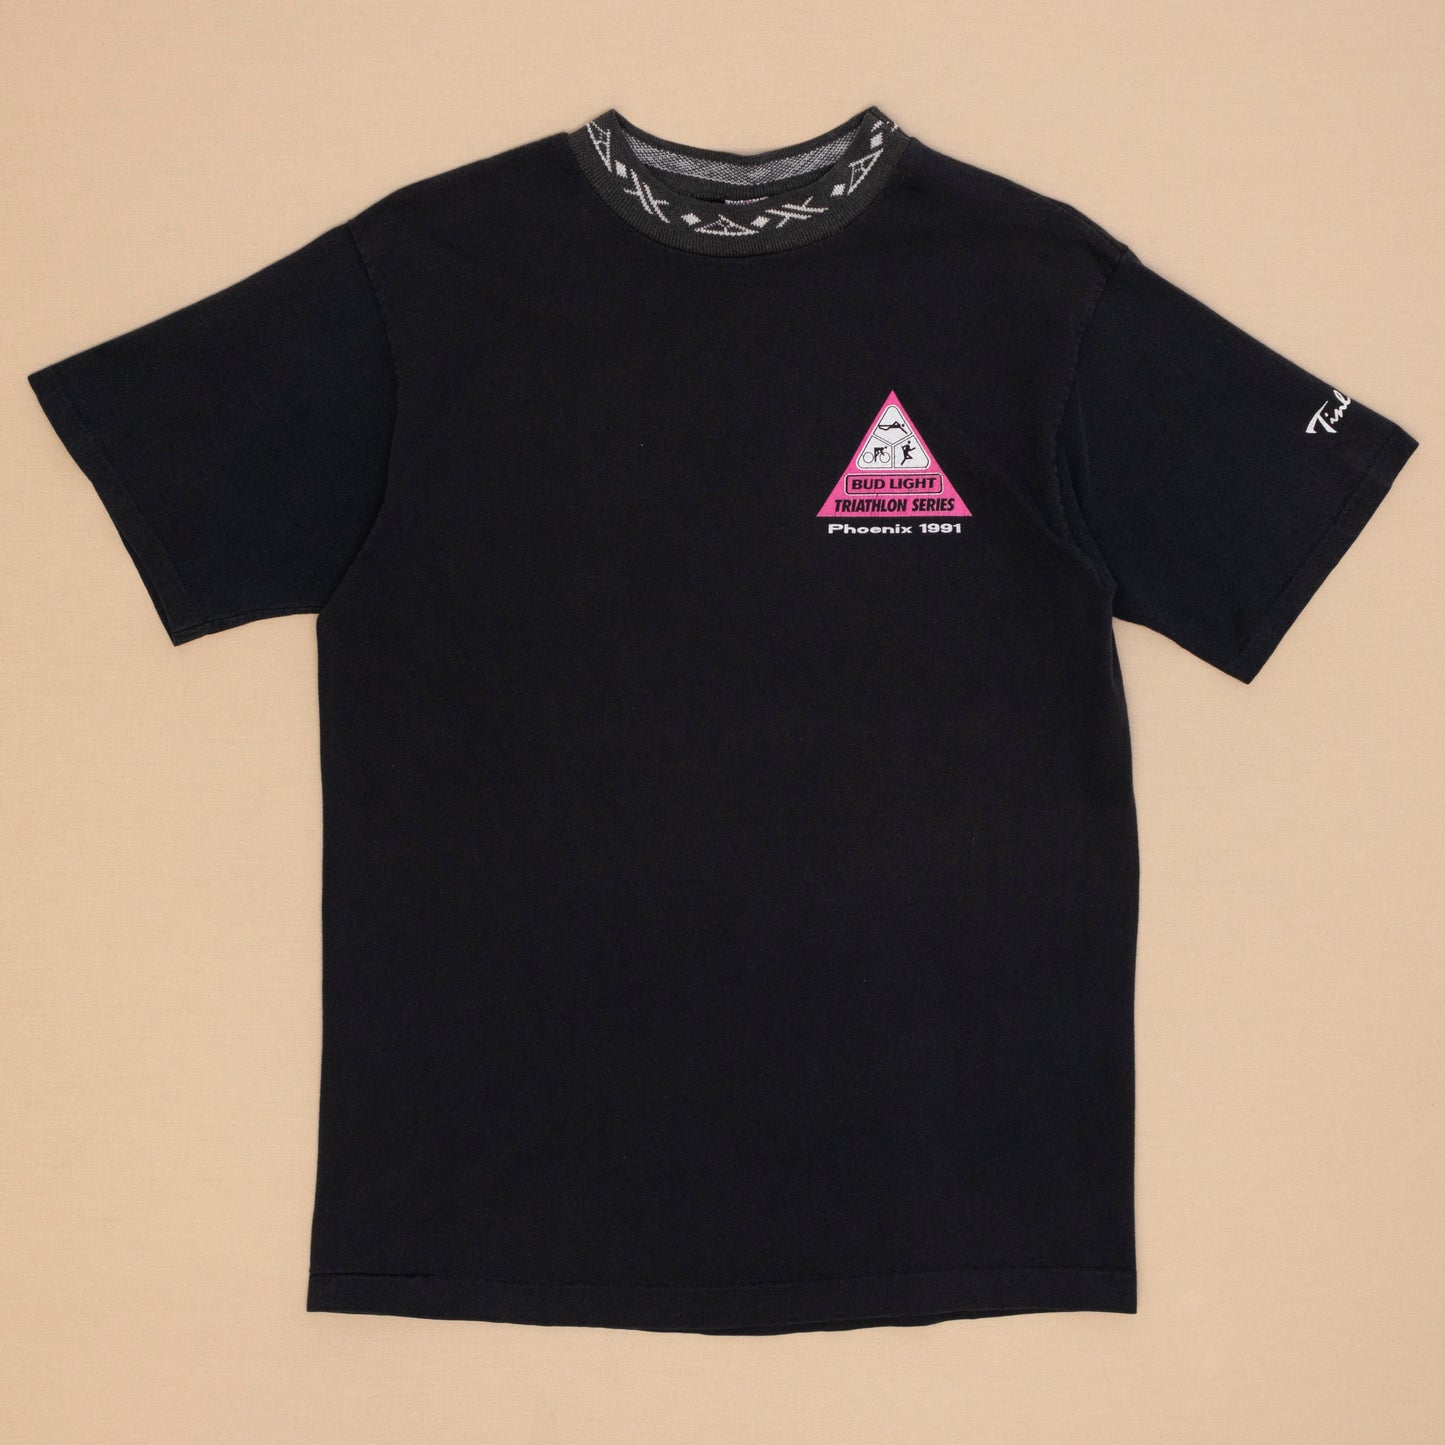 Bud Light Triathlon T Shirt, L